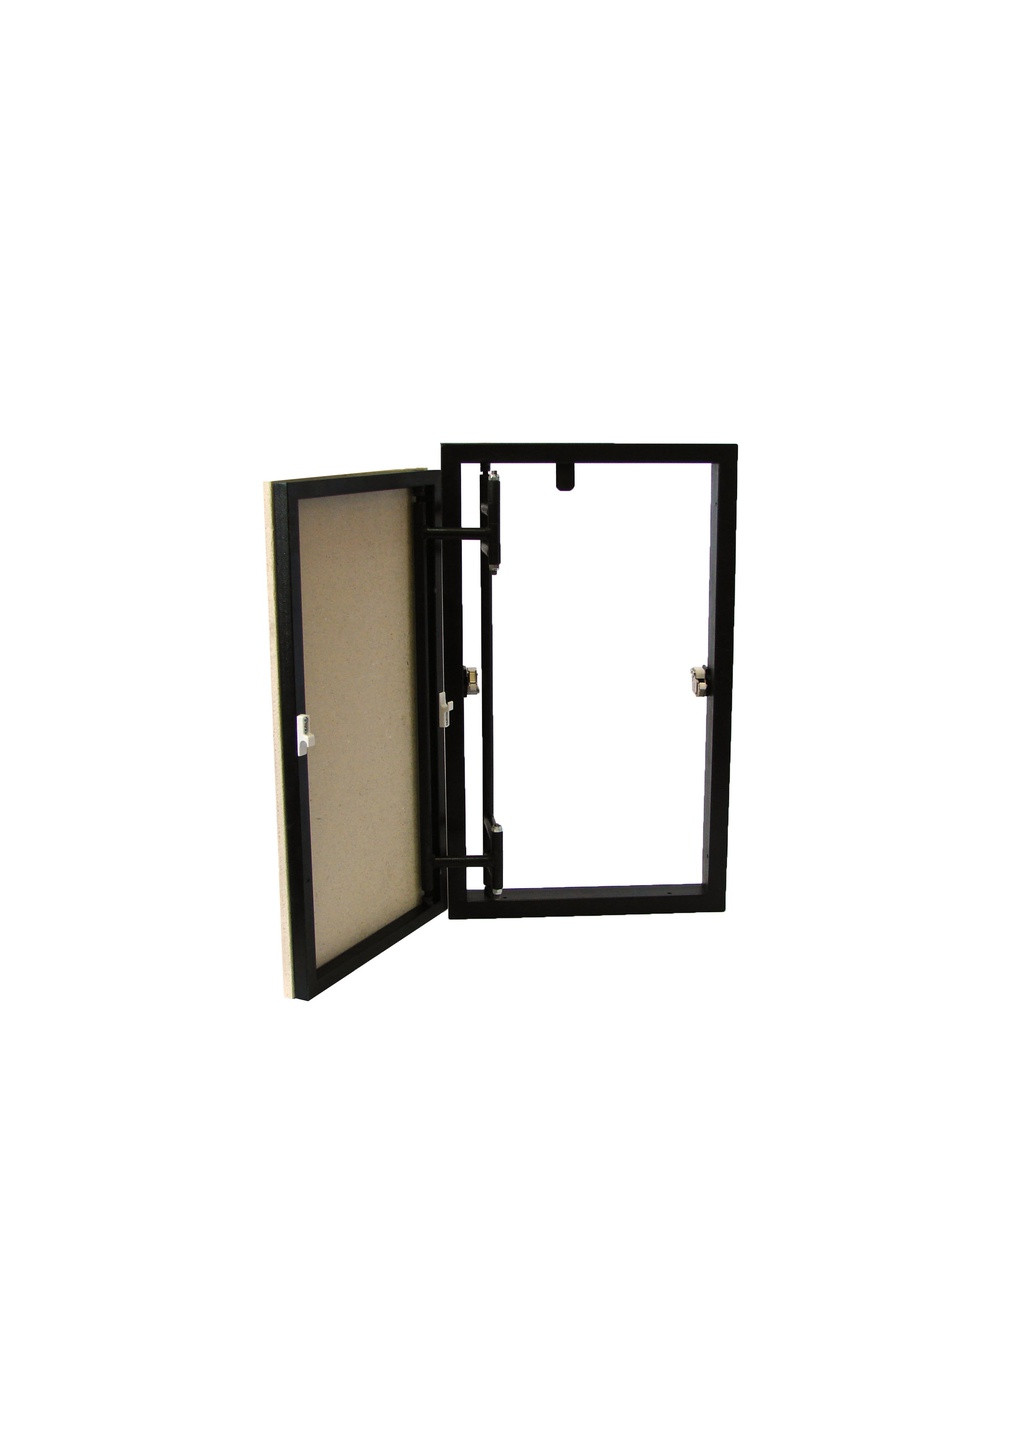 Ревизионный люк скрытого монтажа под плитку нажимного типа 300x650 ревизионная дверца для плитки (1129) S-Dom (264209609)